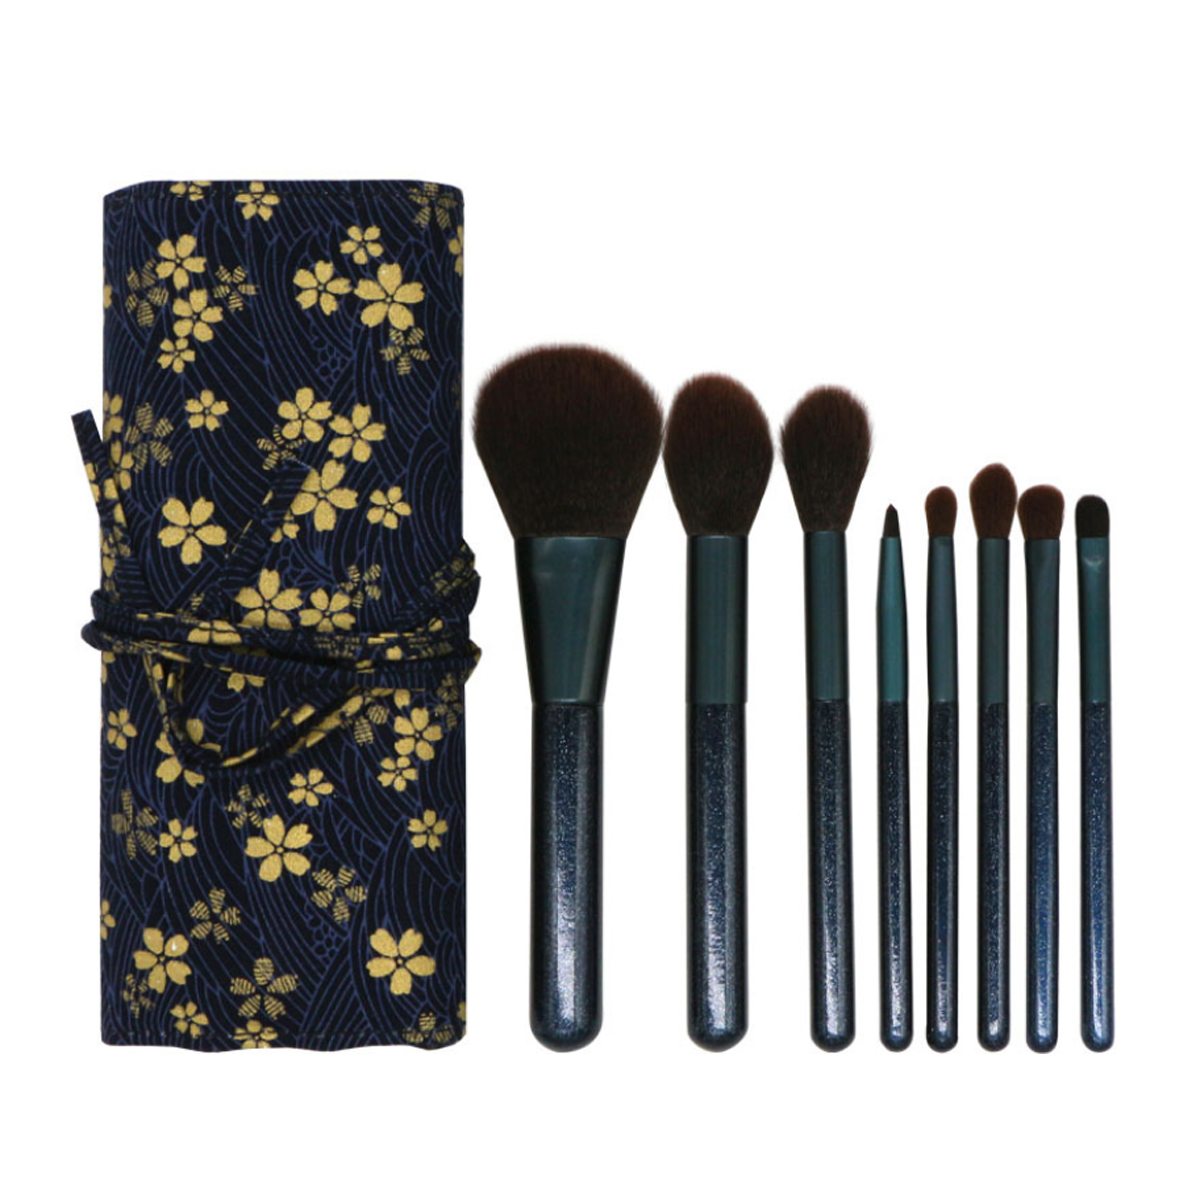 Portable Make-up Brush Set